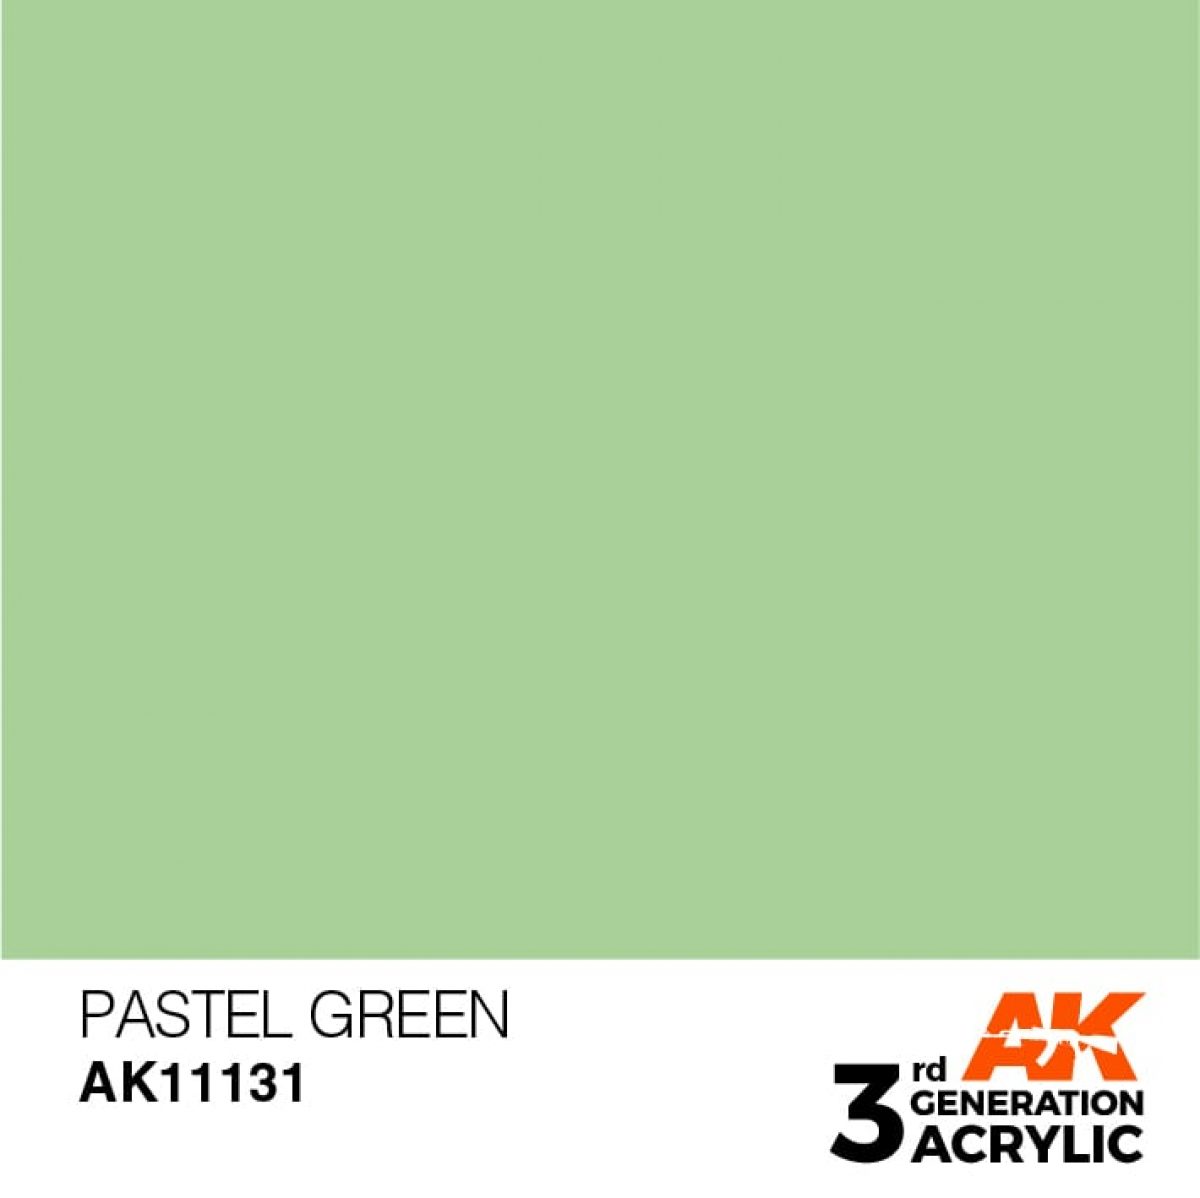 Pastel green